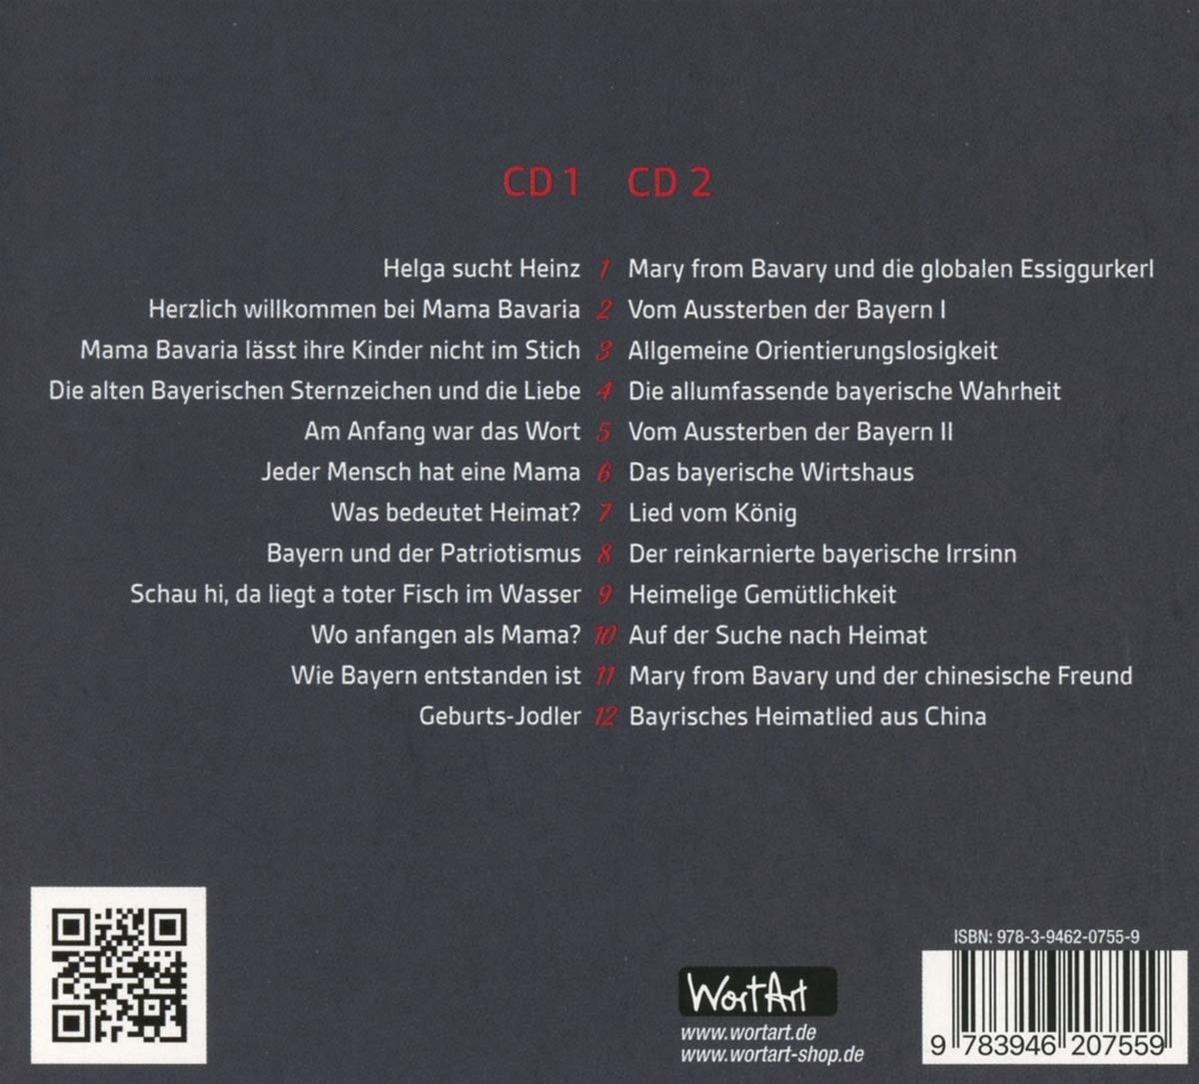 Luise Kinseher (2CD) Mamma Bavaria - - Mia (CD)